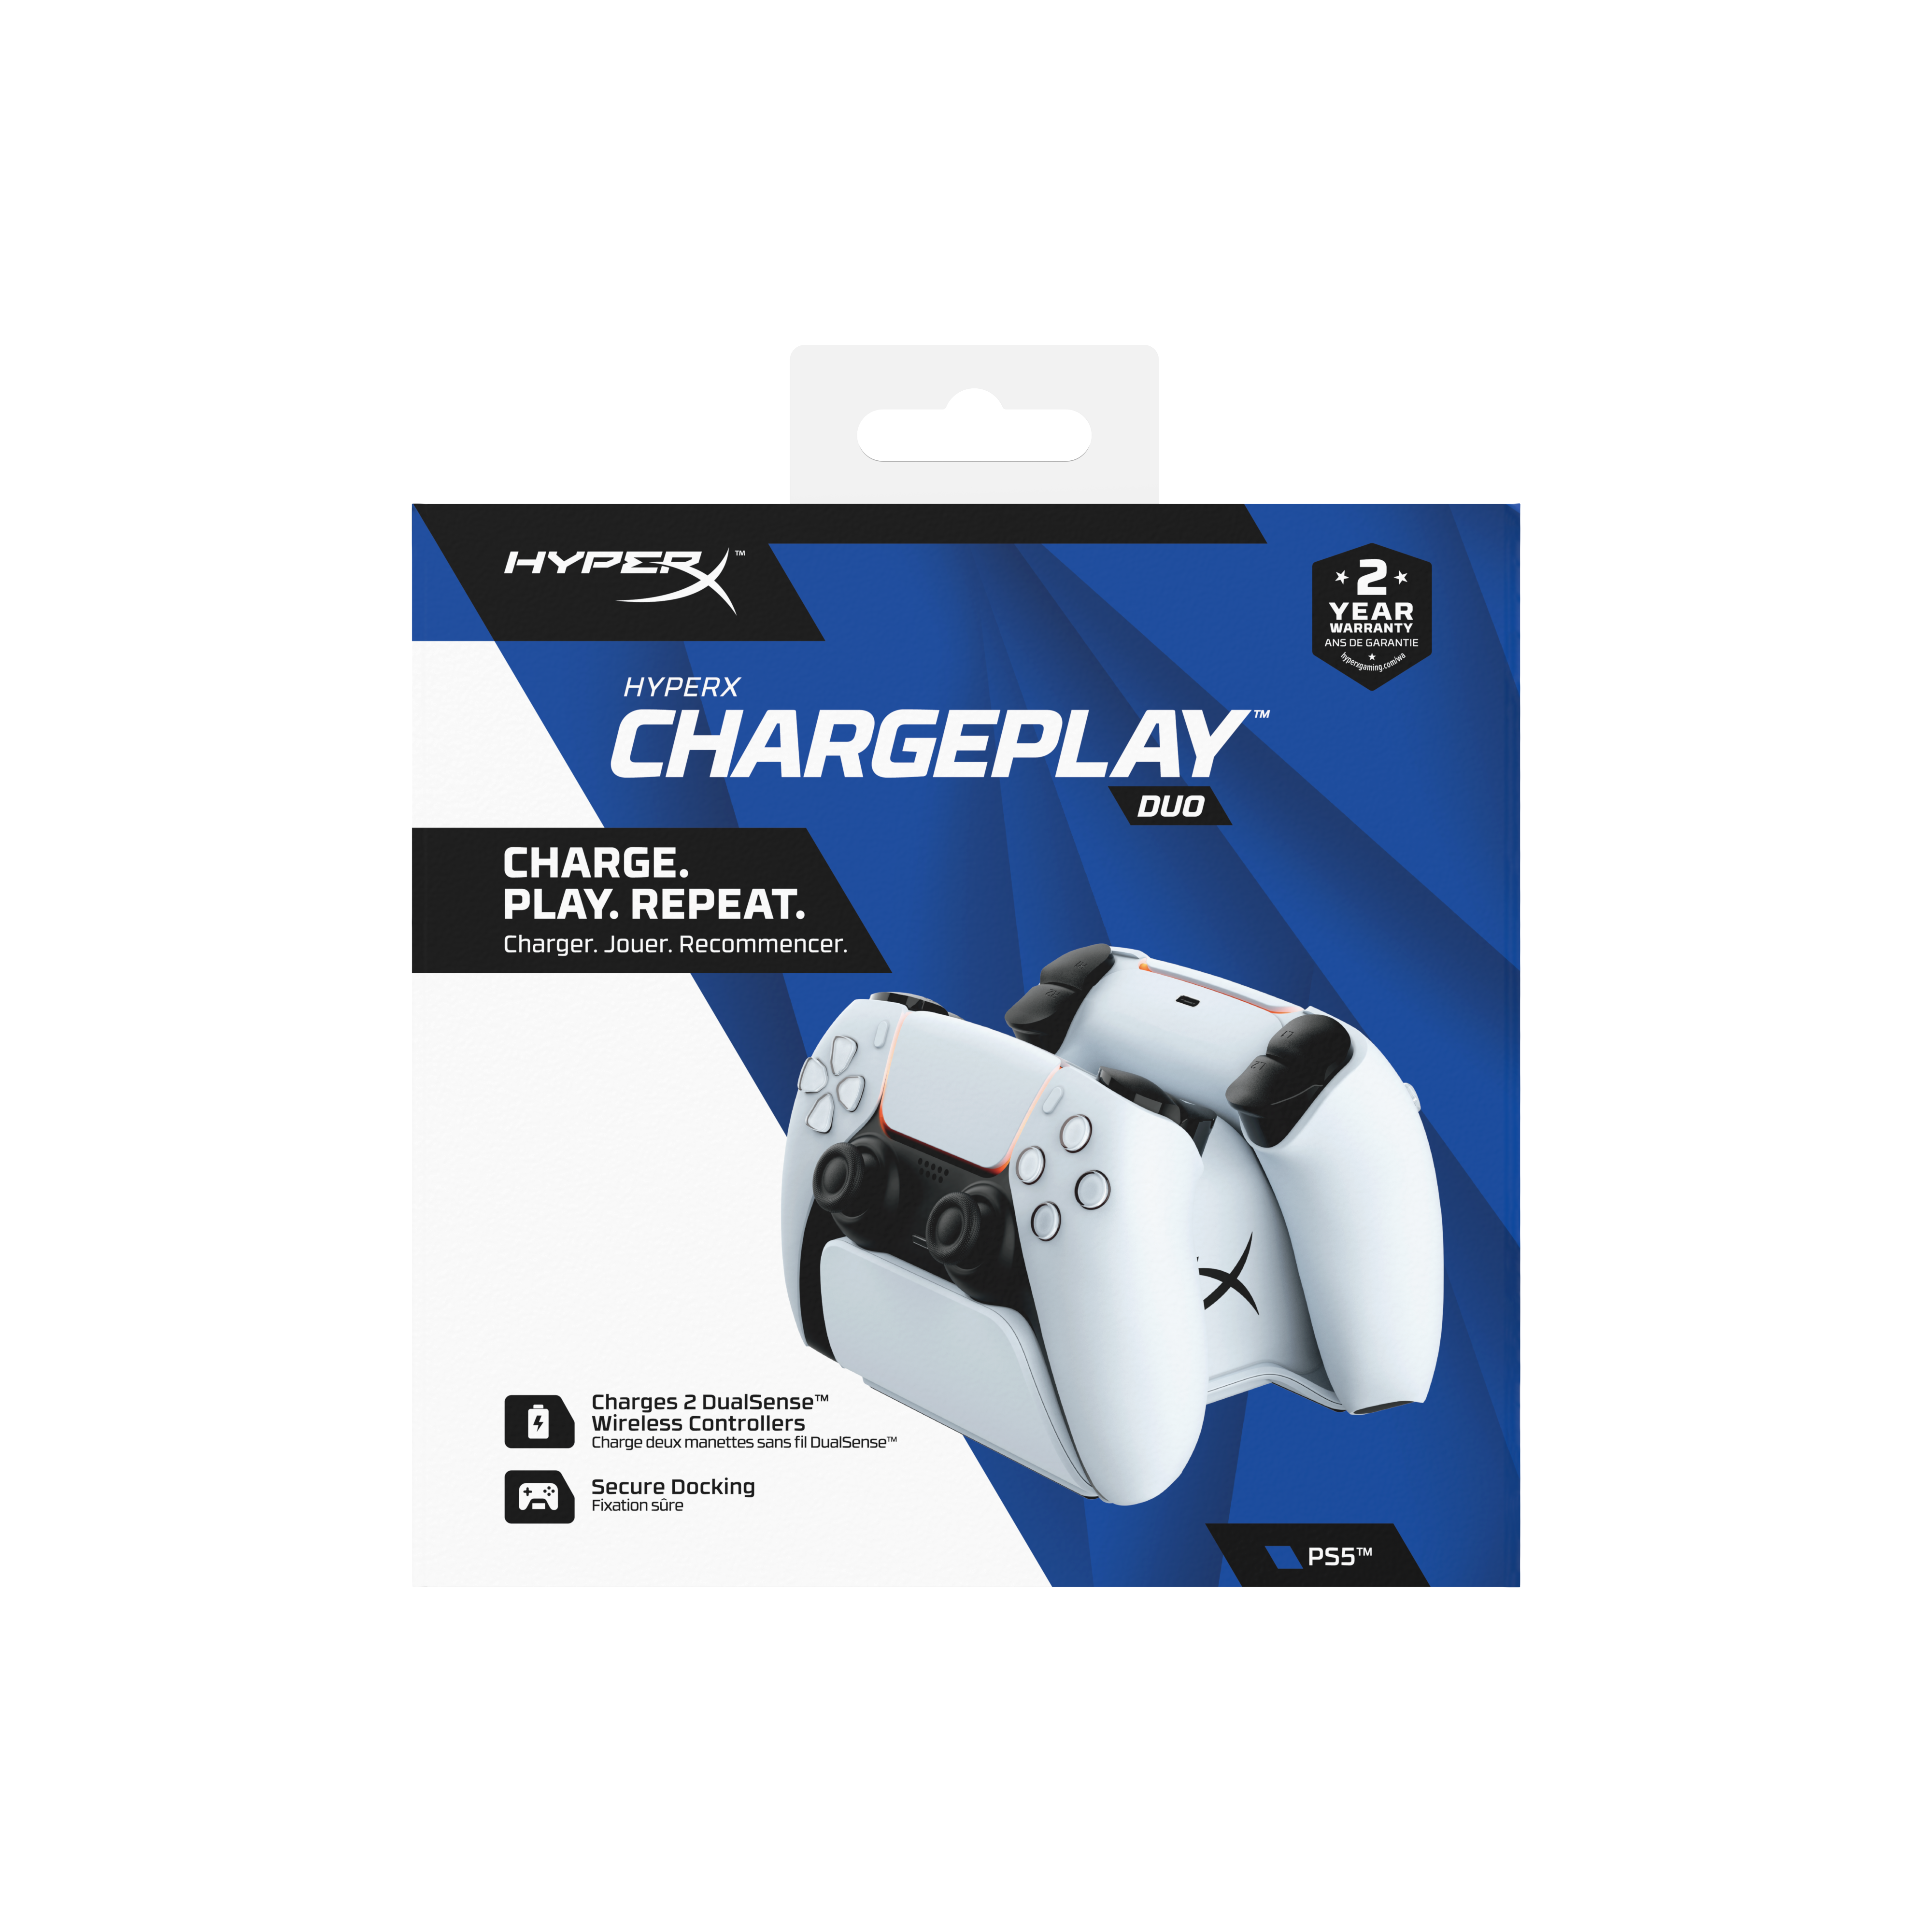 HYPERX ChargePlay Duo - PS5, Schwarz-Weiß Ladestation